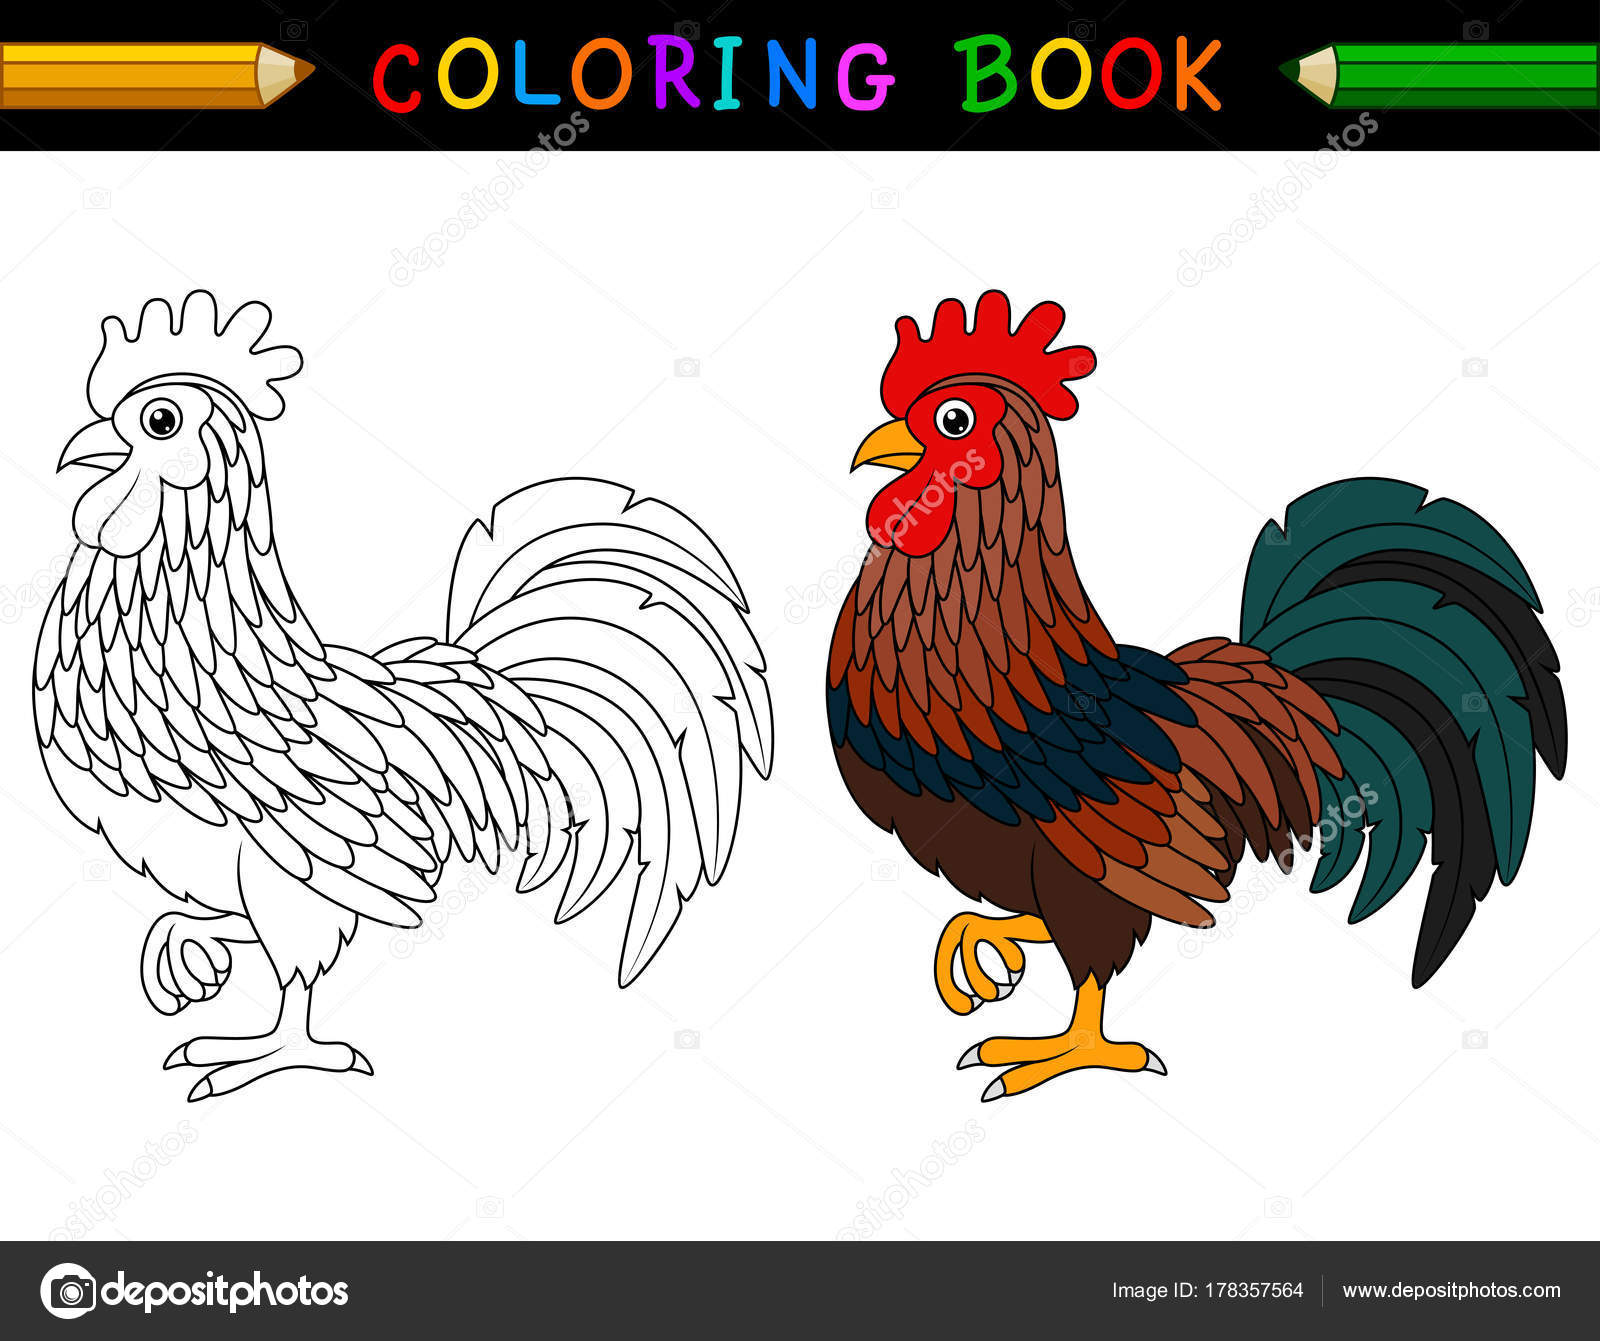 https://st3.depositphotos.com/7857468/17835/v/1600/depositphotos_178357564-stock-illustration-cartoon-rooster-coloring-book.jpg